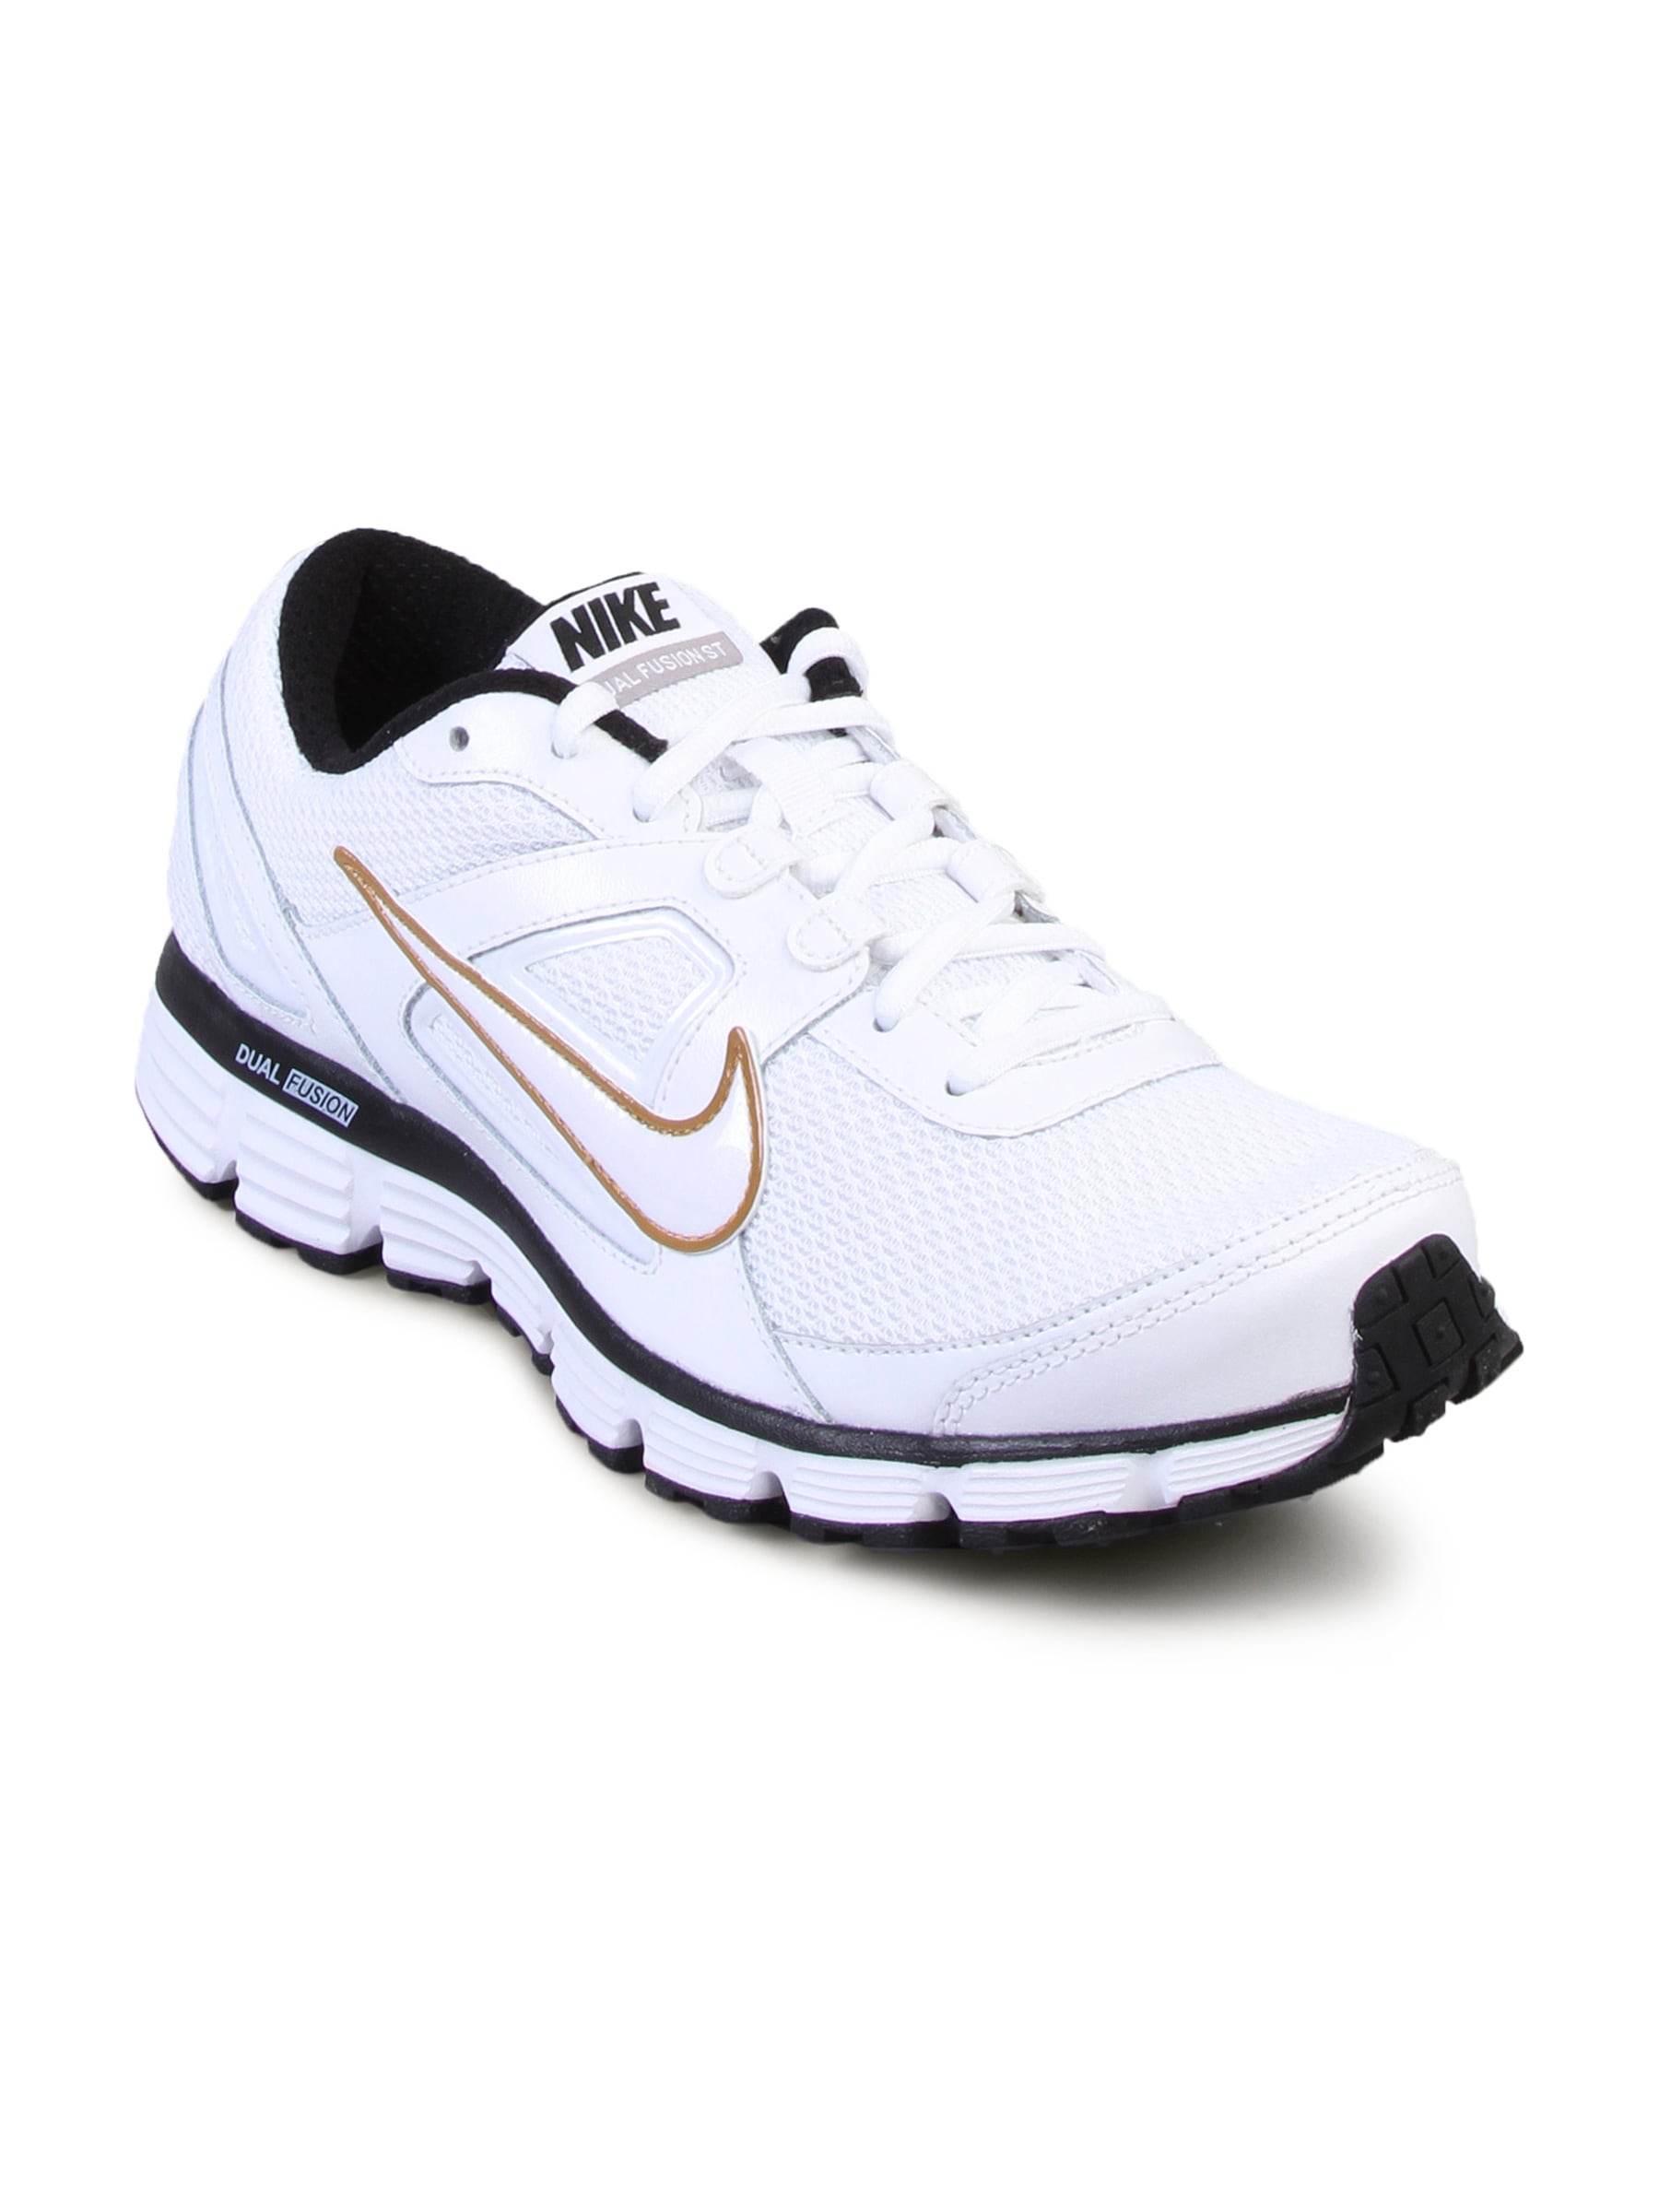 Nike Men's Dual Fusion White Shoe